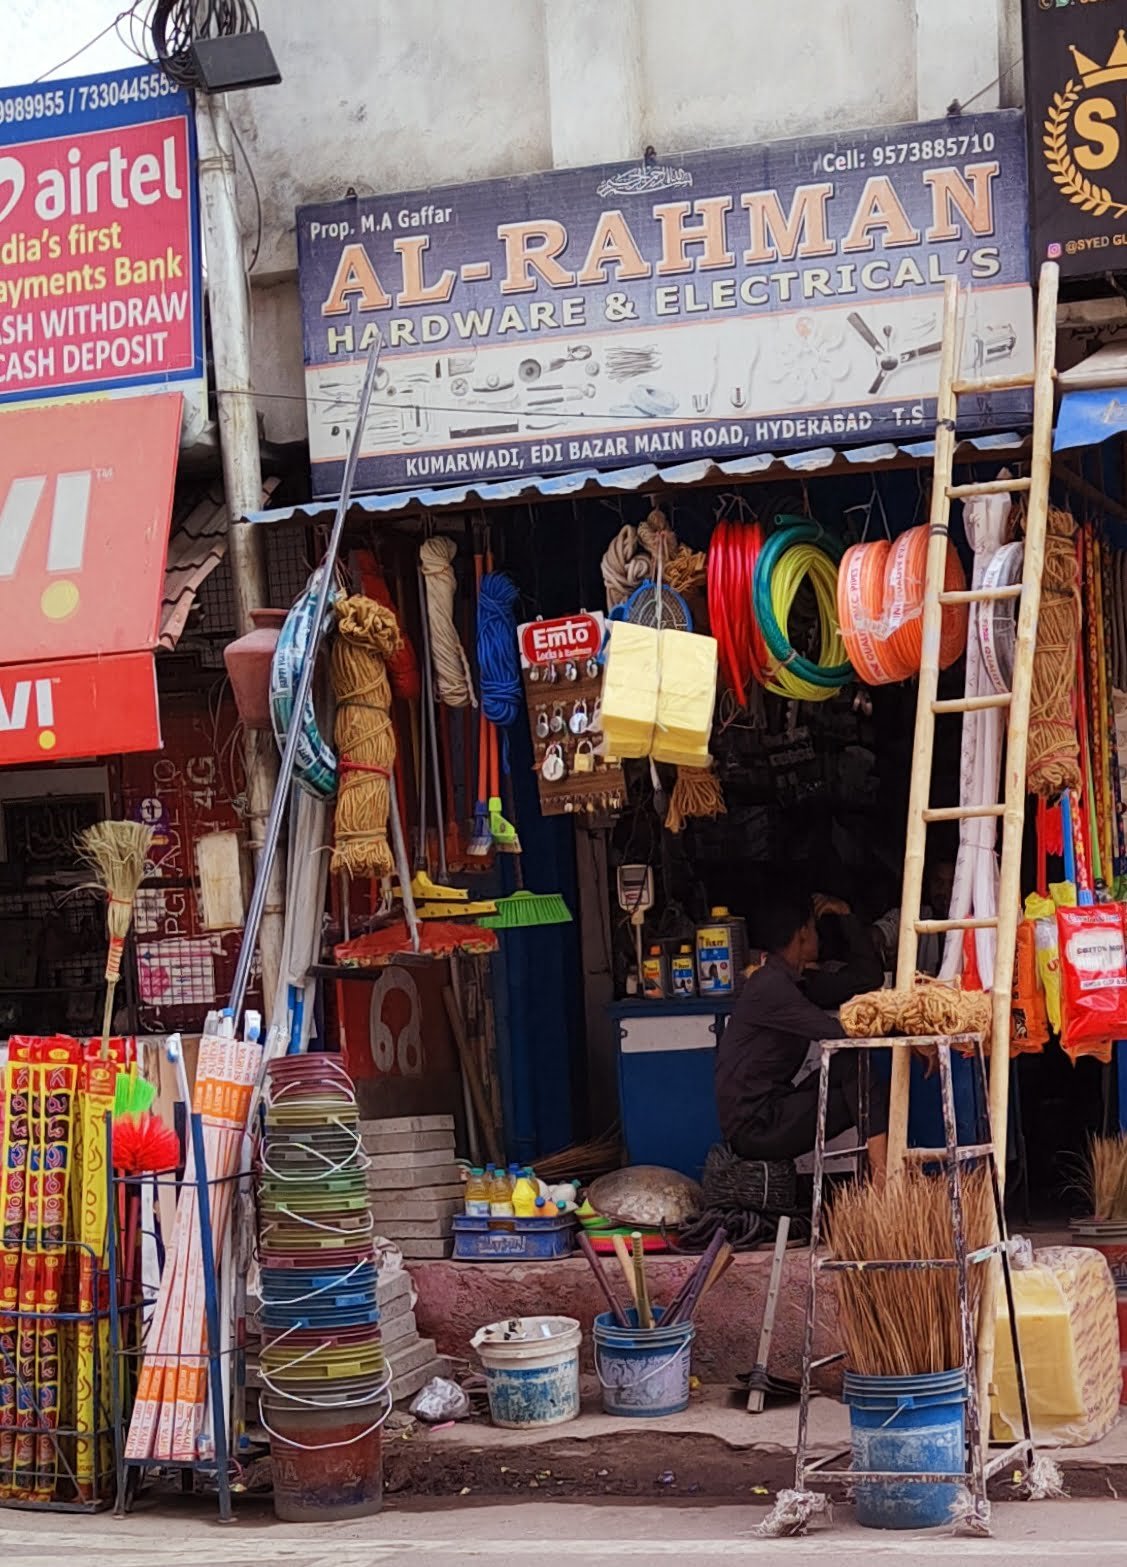 Al-Rahman Hardware & Electricals in Edi Bazar